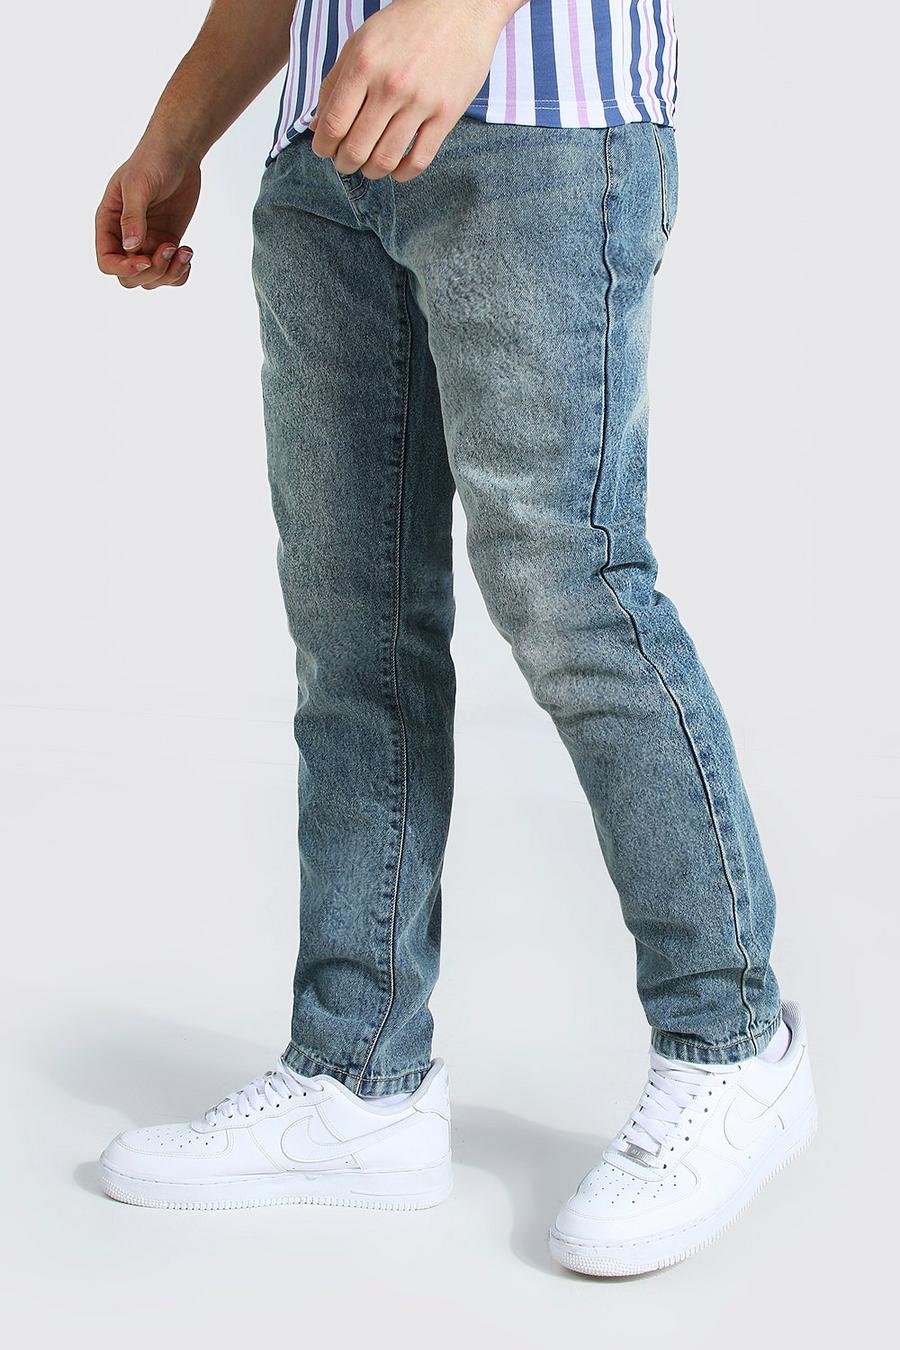 כחול וינטג' ג'ינס מבד קשיח בגזרה צרה image number 1